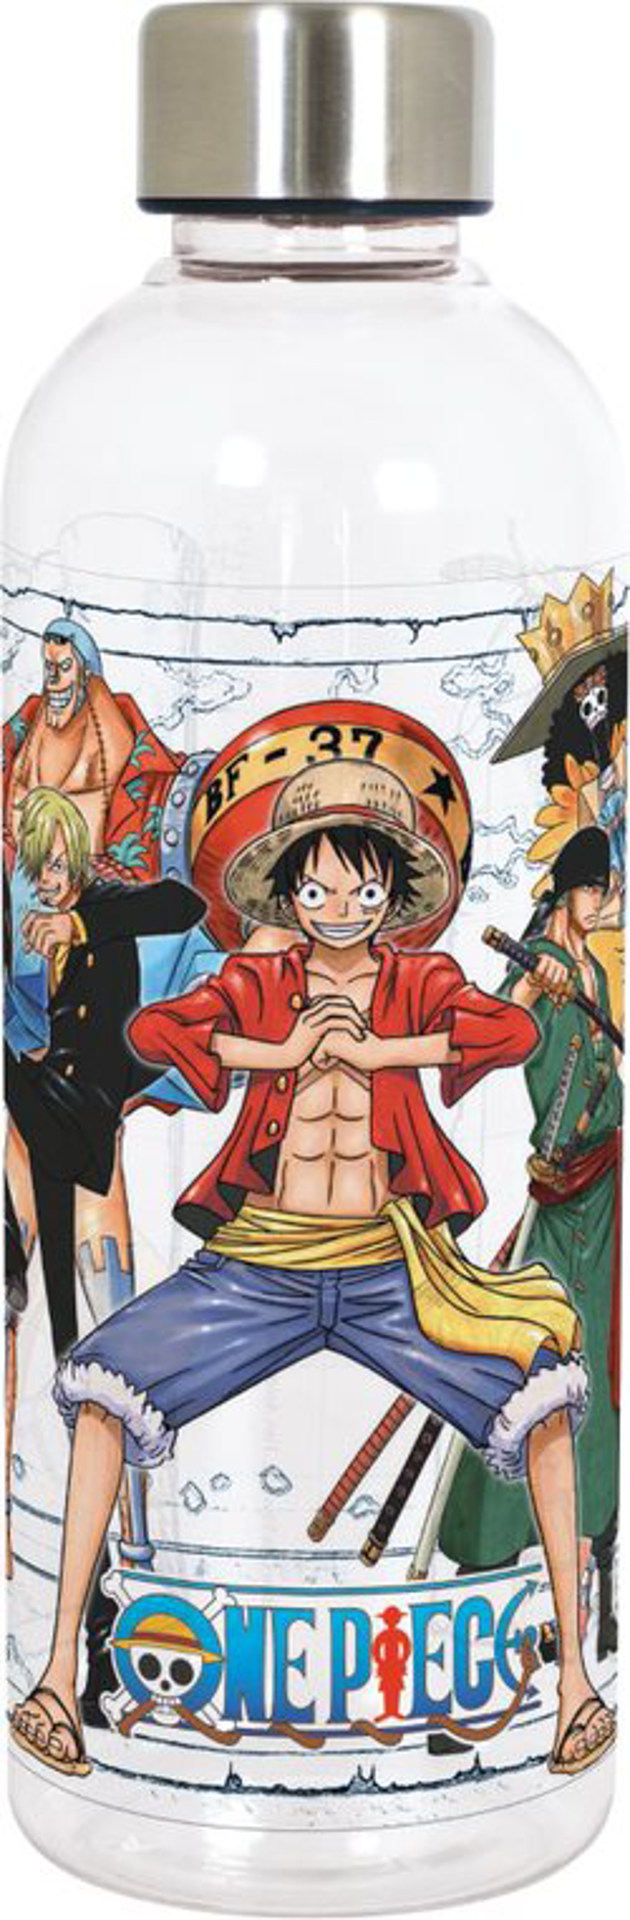 One Piece 3d pas cher - Achat neuf et occasion